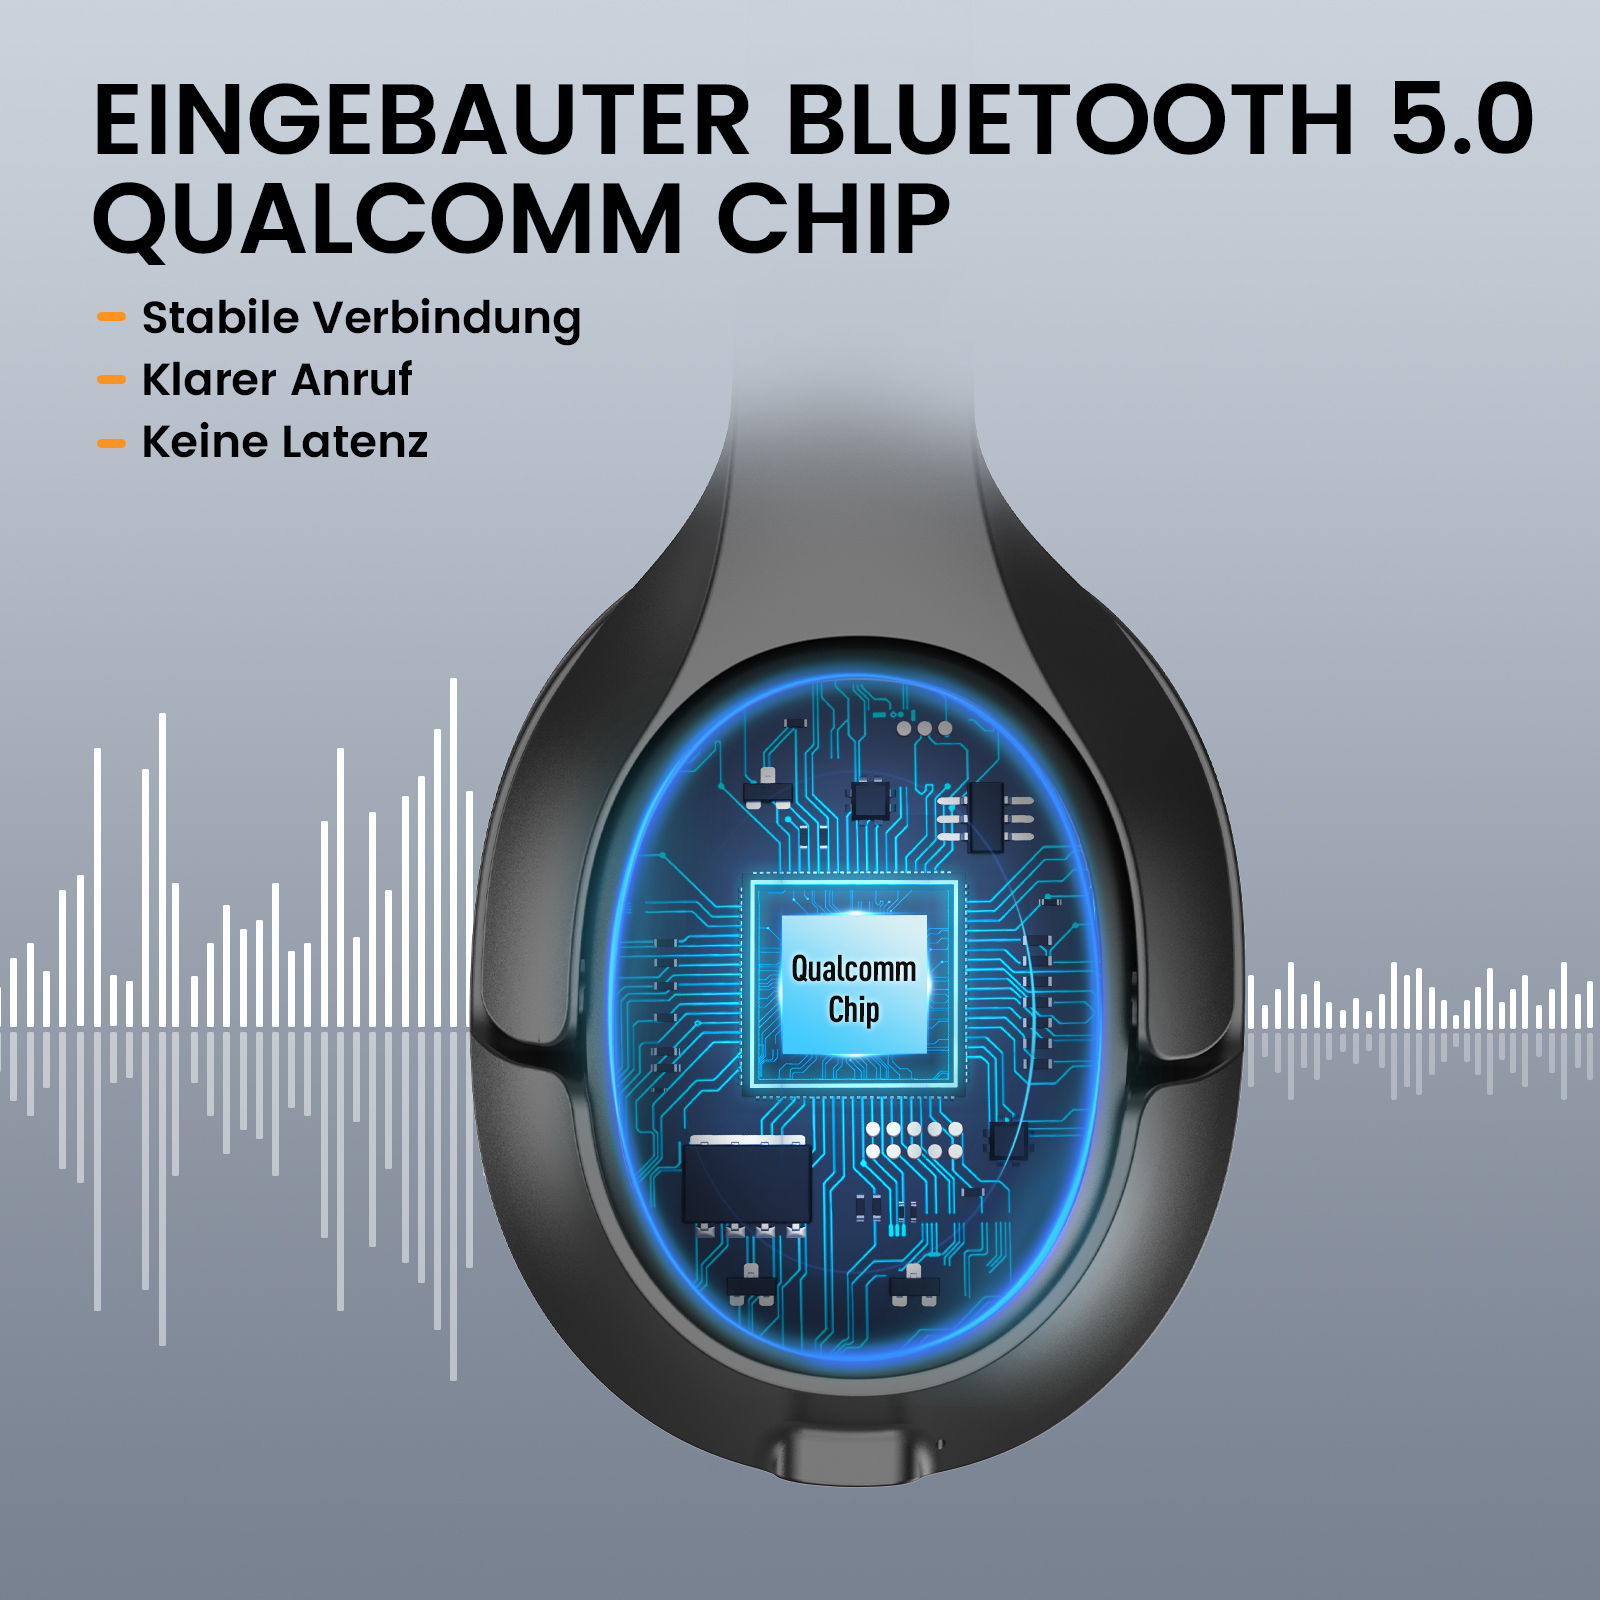 Bluetooth Headset H1, Black Over-ear EKSA-TRADE Bluetooth